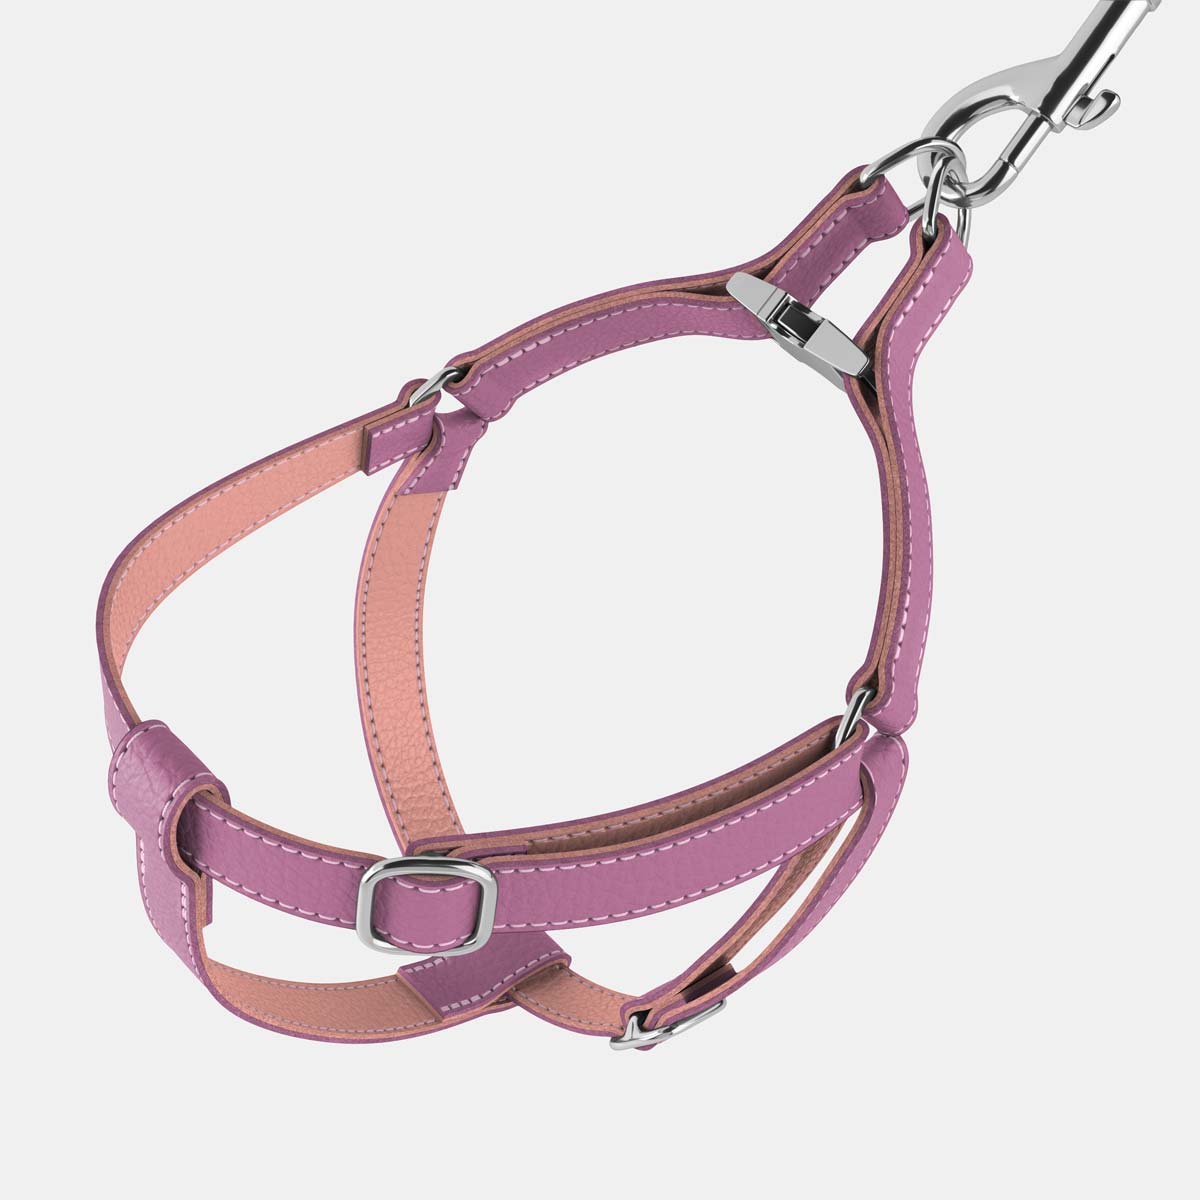 Leather Dog Harness - Purple and Pink - RYAN London